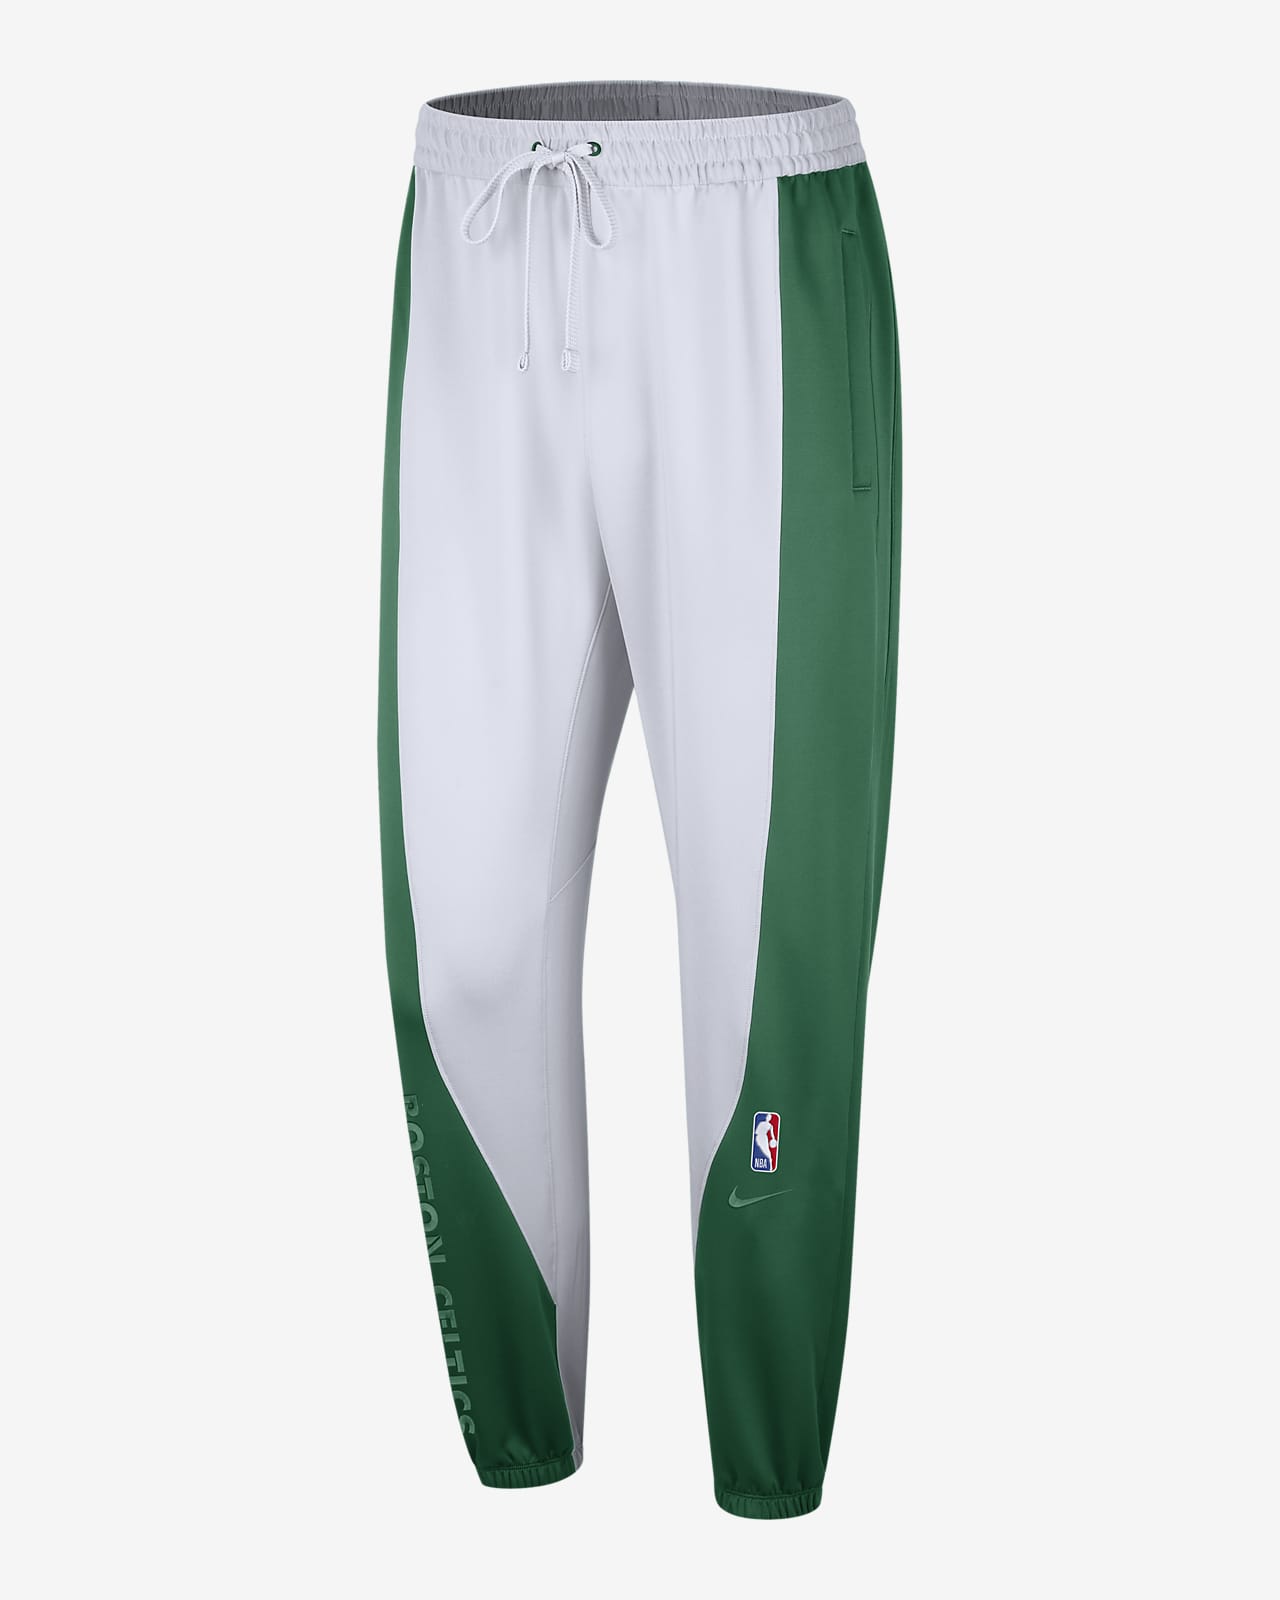 Boston Celtics Showtime Nike Dri-FIT NBA-Hose für Herren